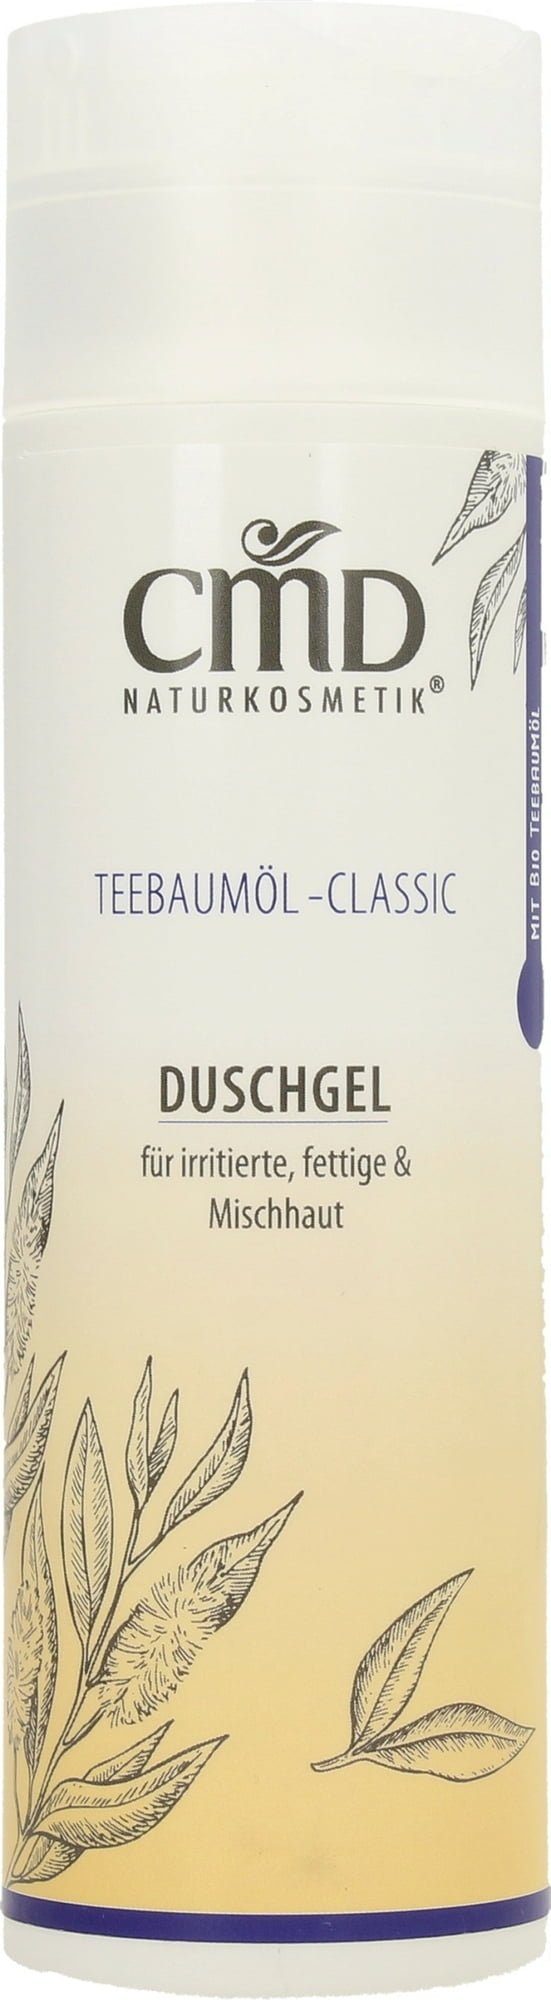 CMD Naturkosmetik Duschgel 200ml Teebaumöl Duschgel